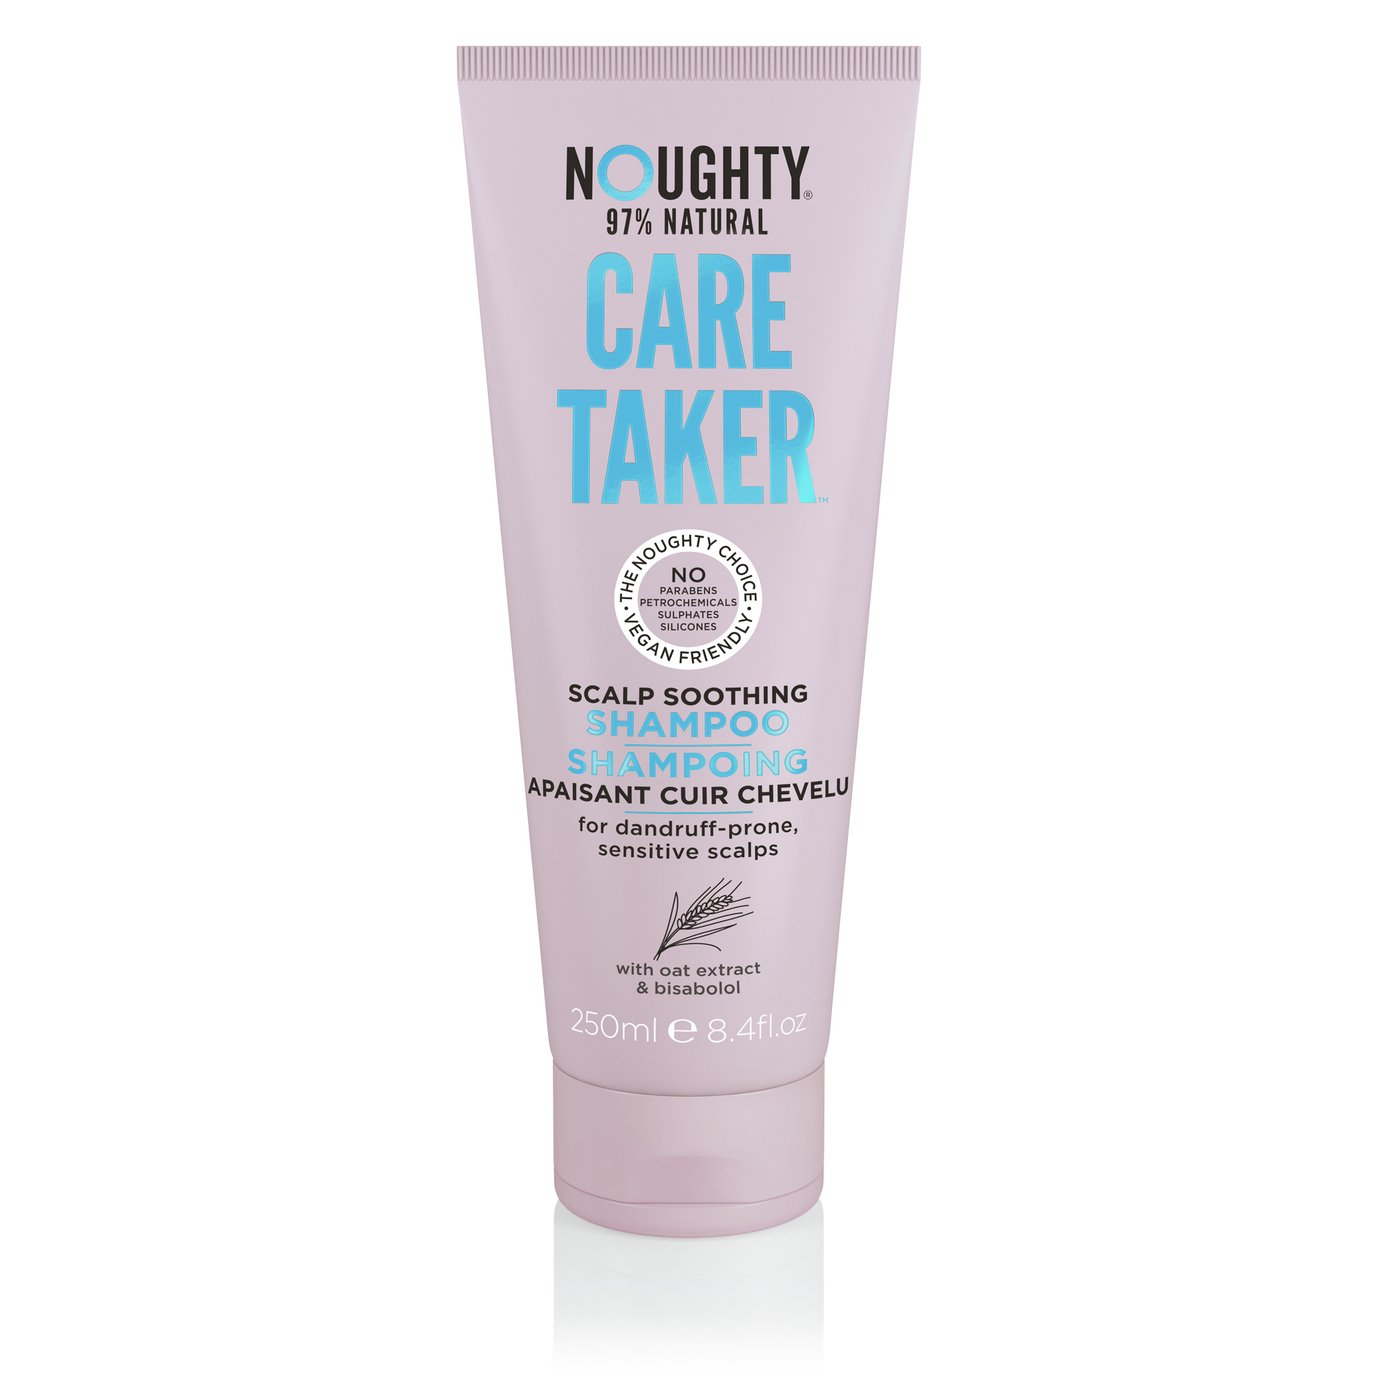 Noughty Care Taker Shampoo - 250ml